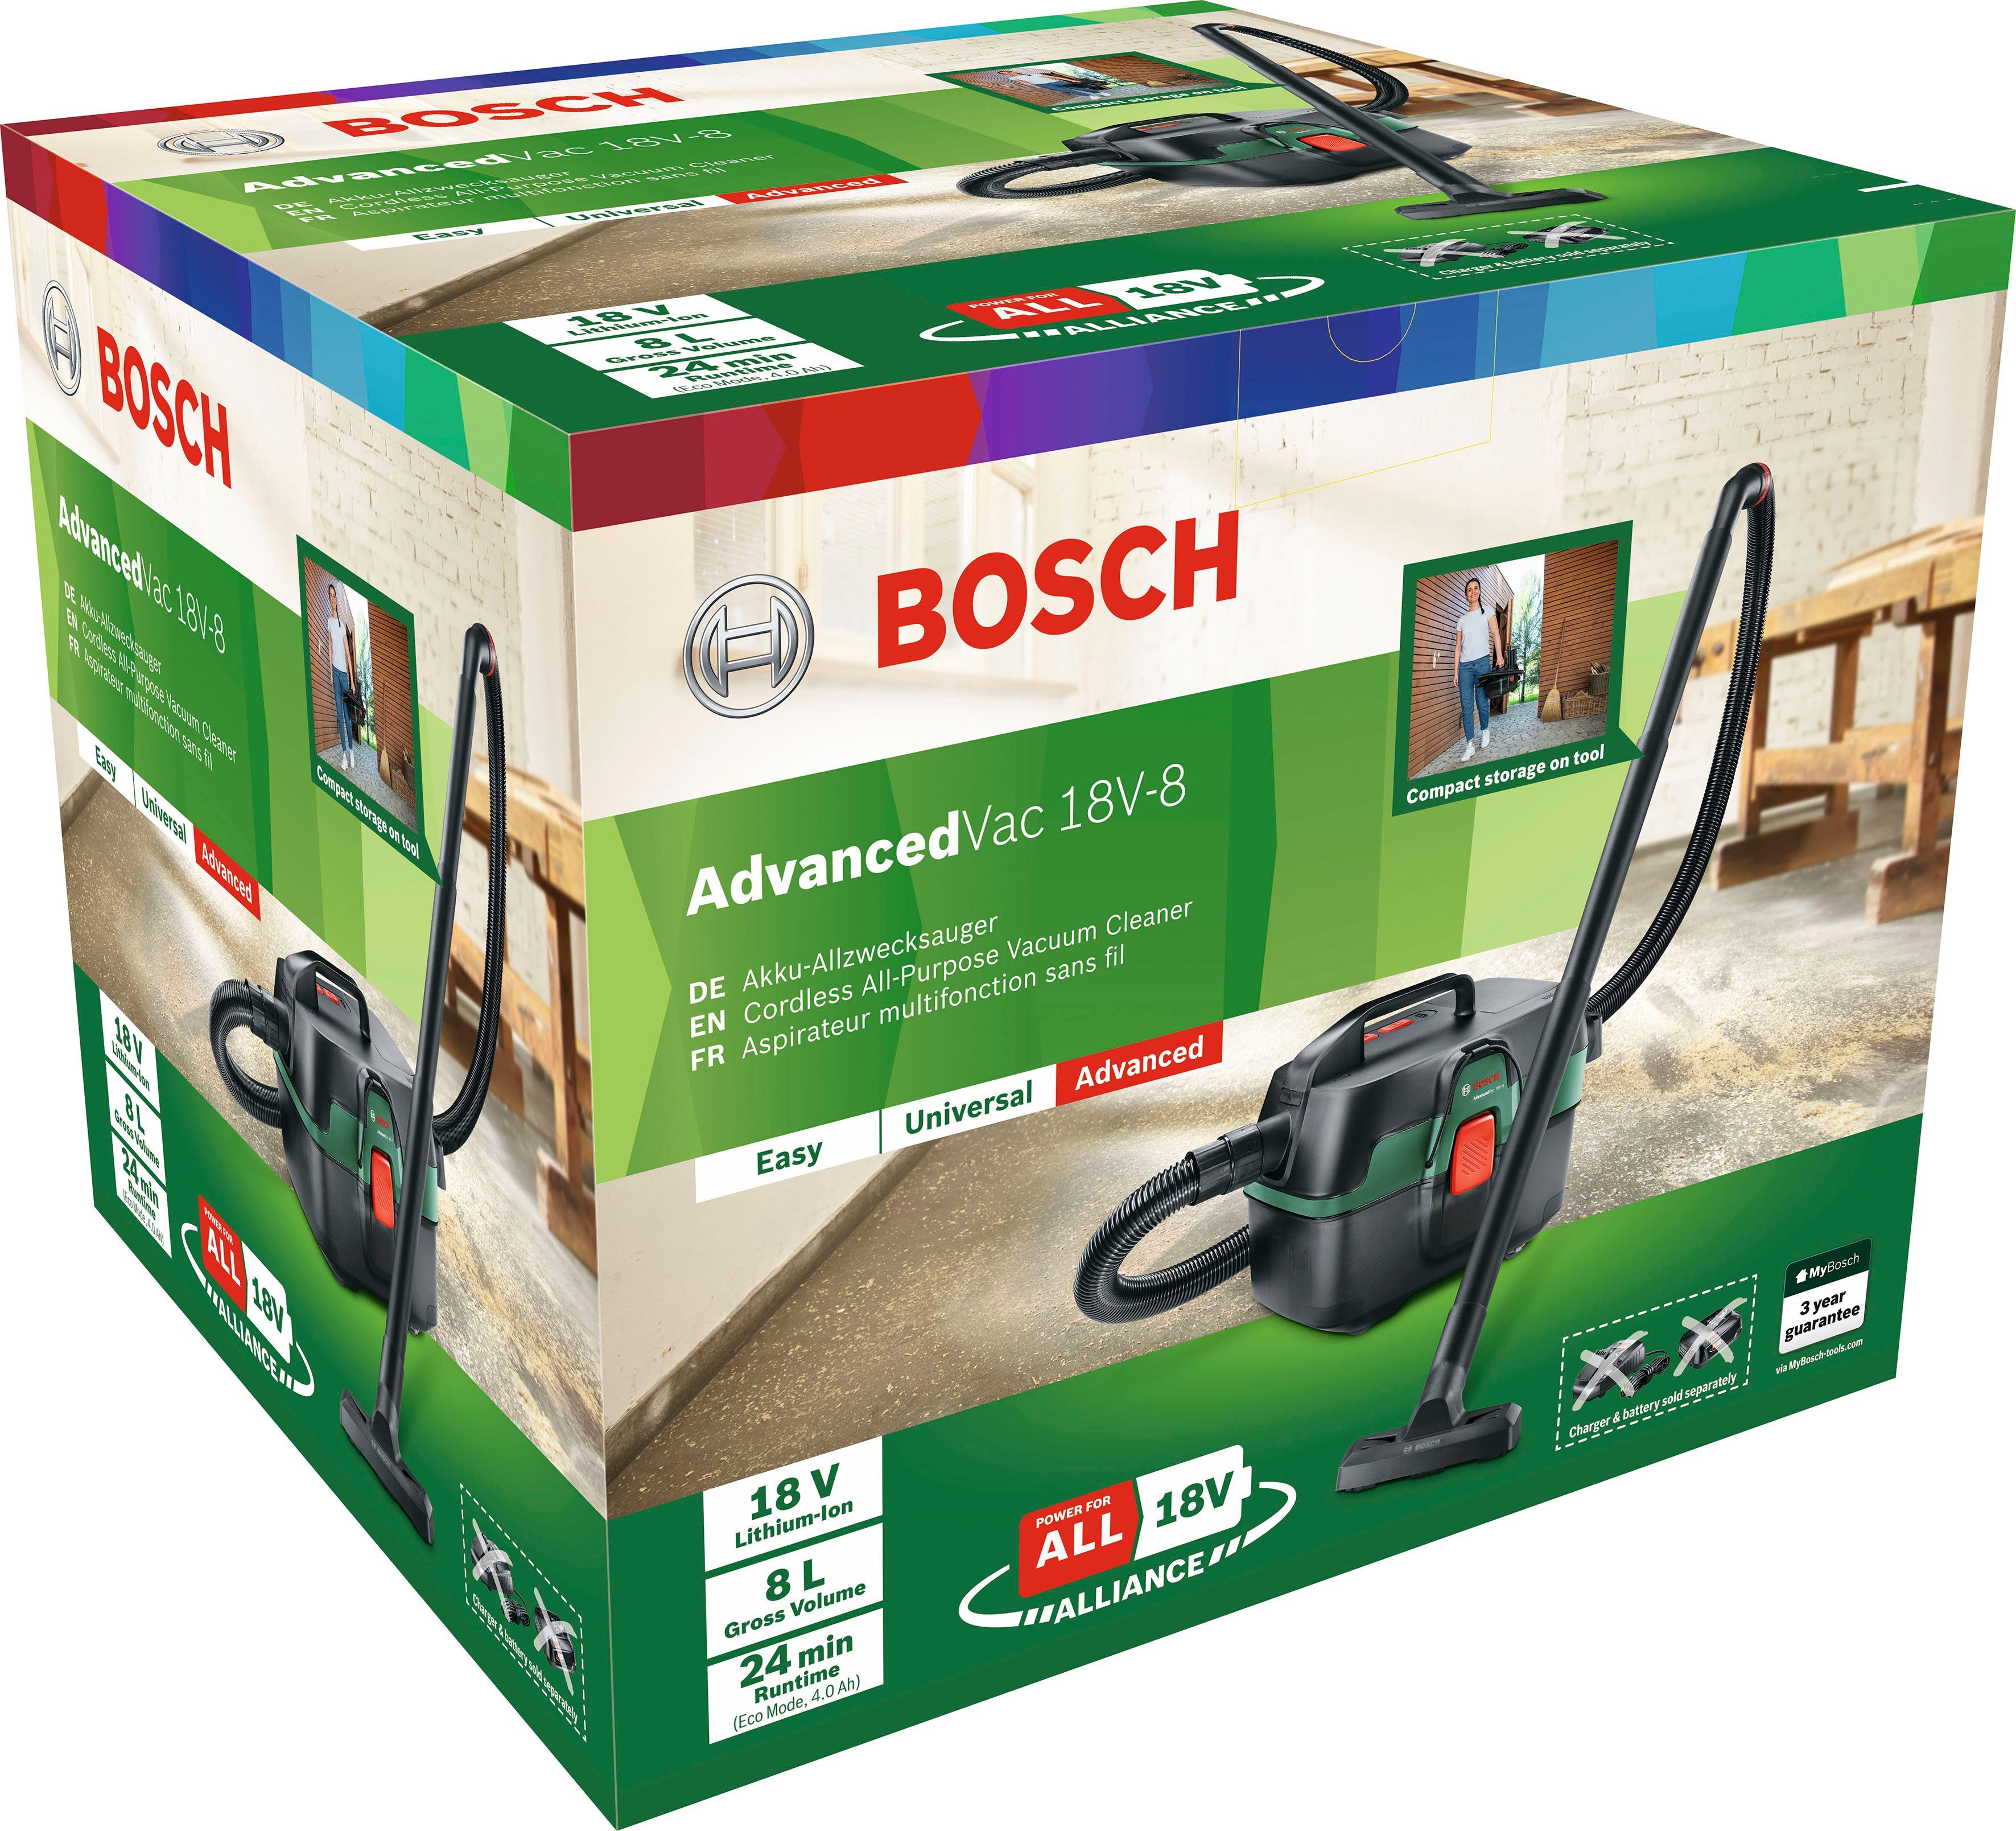 Bosch Home & Nass-Trocken-Akkusauger AdvancedVac und Beutel, mit Akku Garden ohne 18V-8, Ladegerät